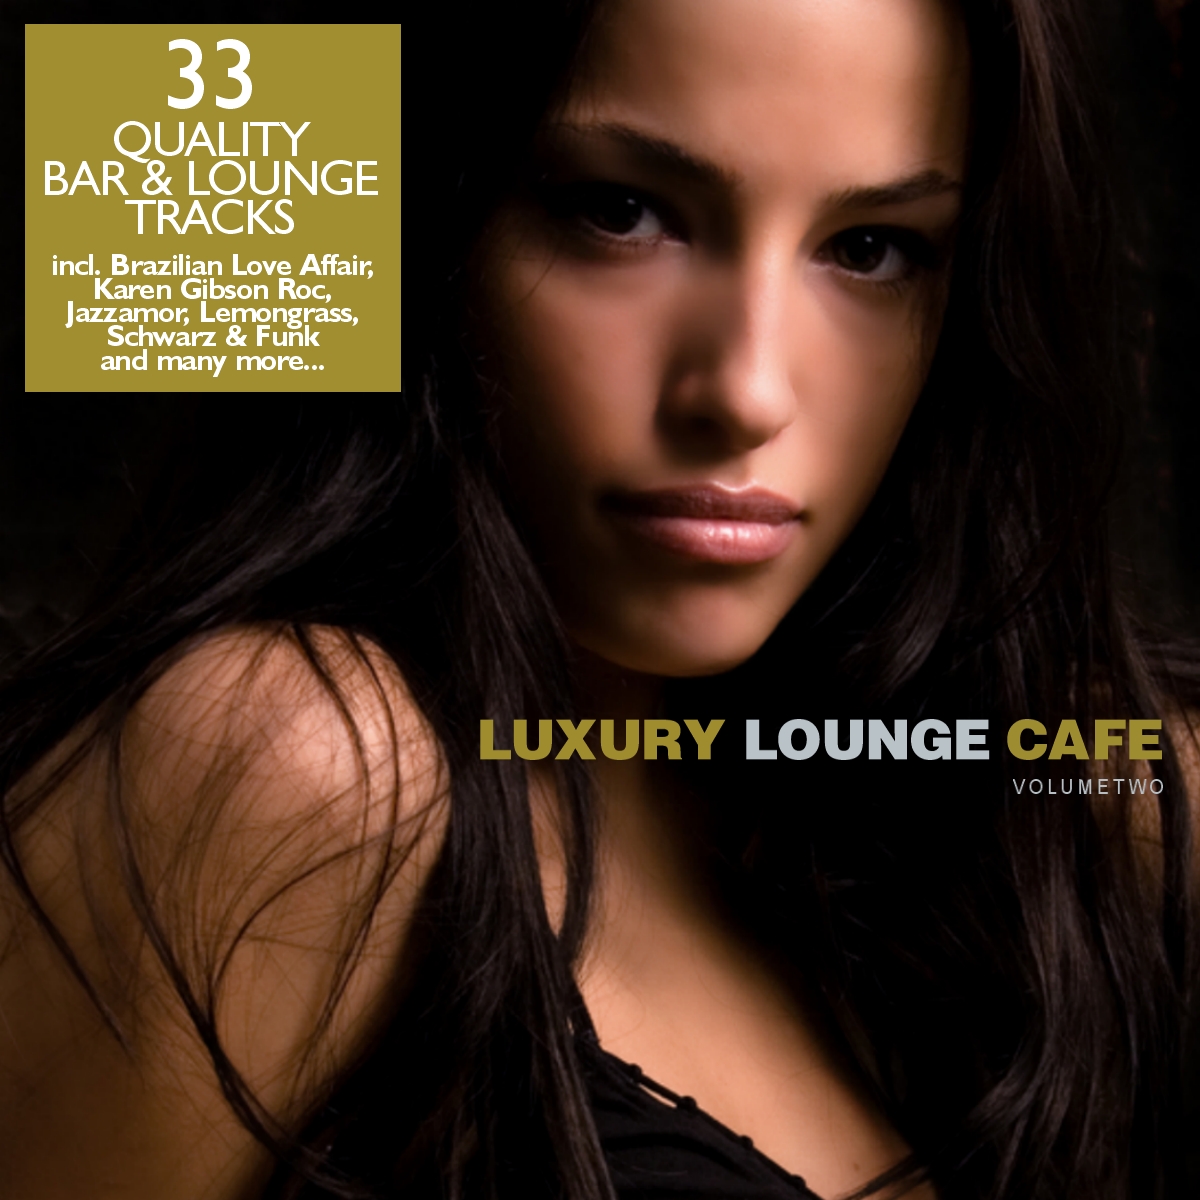 Luxury Lounge Cafe Vol. 2 - 33 Quality Bar & Lounge Tracks